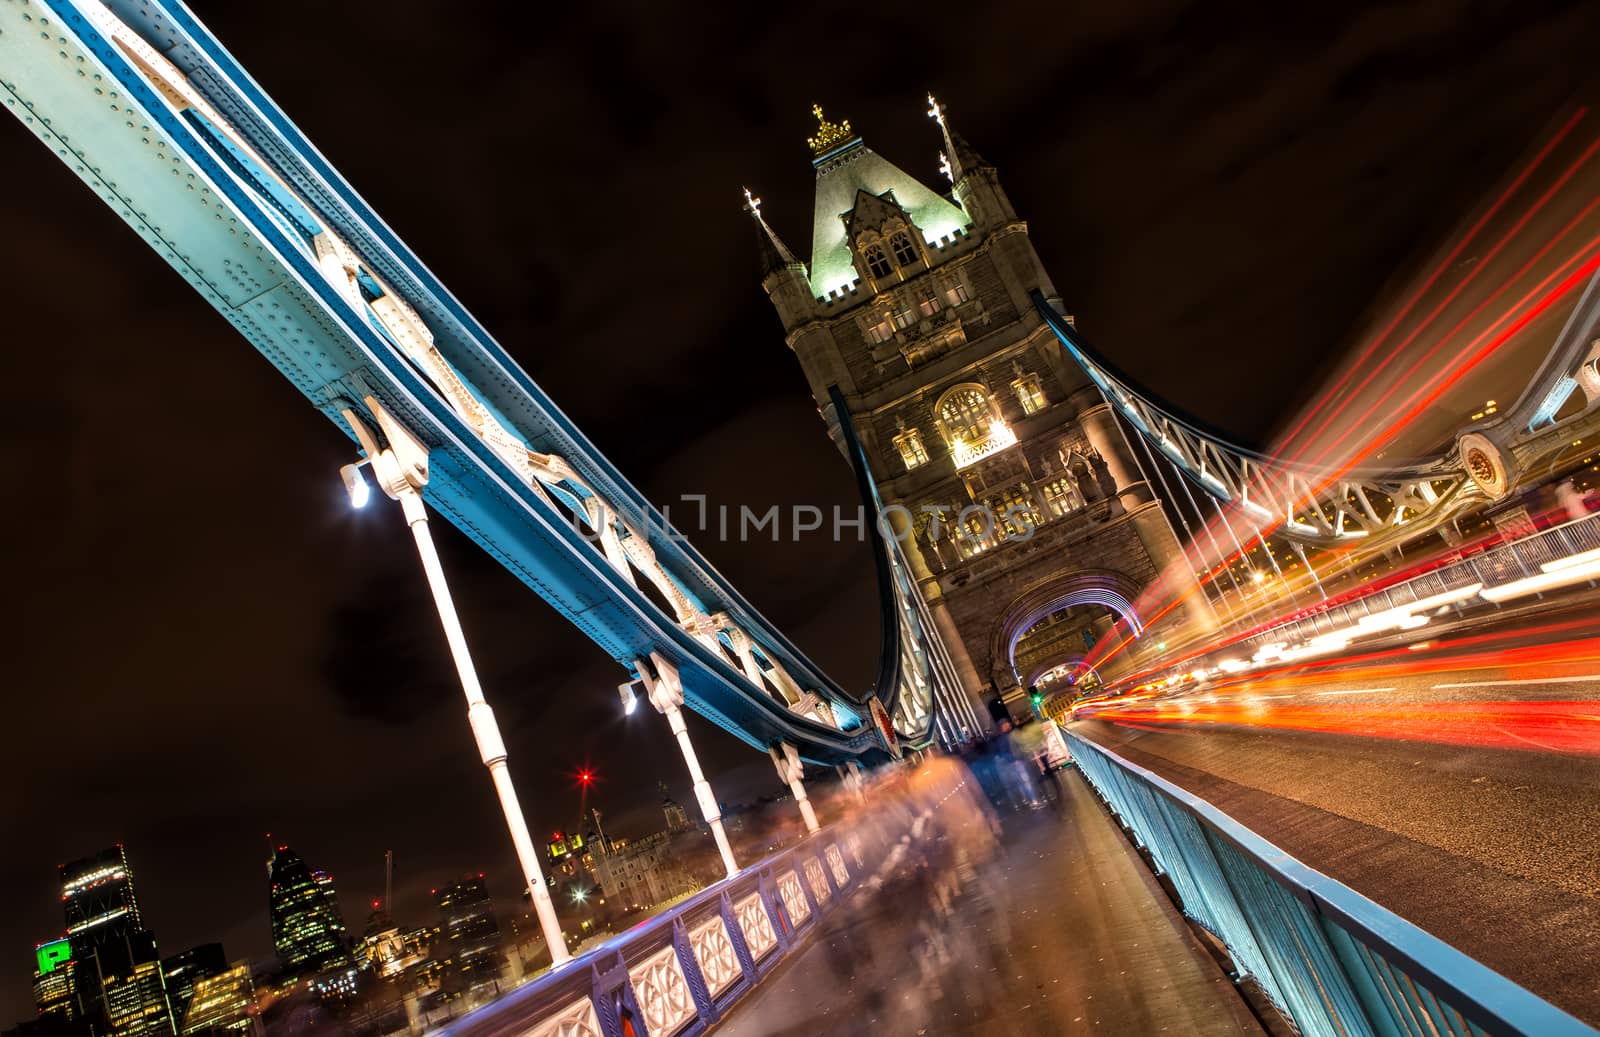 Tower Bridge at night, London, United Kingdom by mitakag